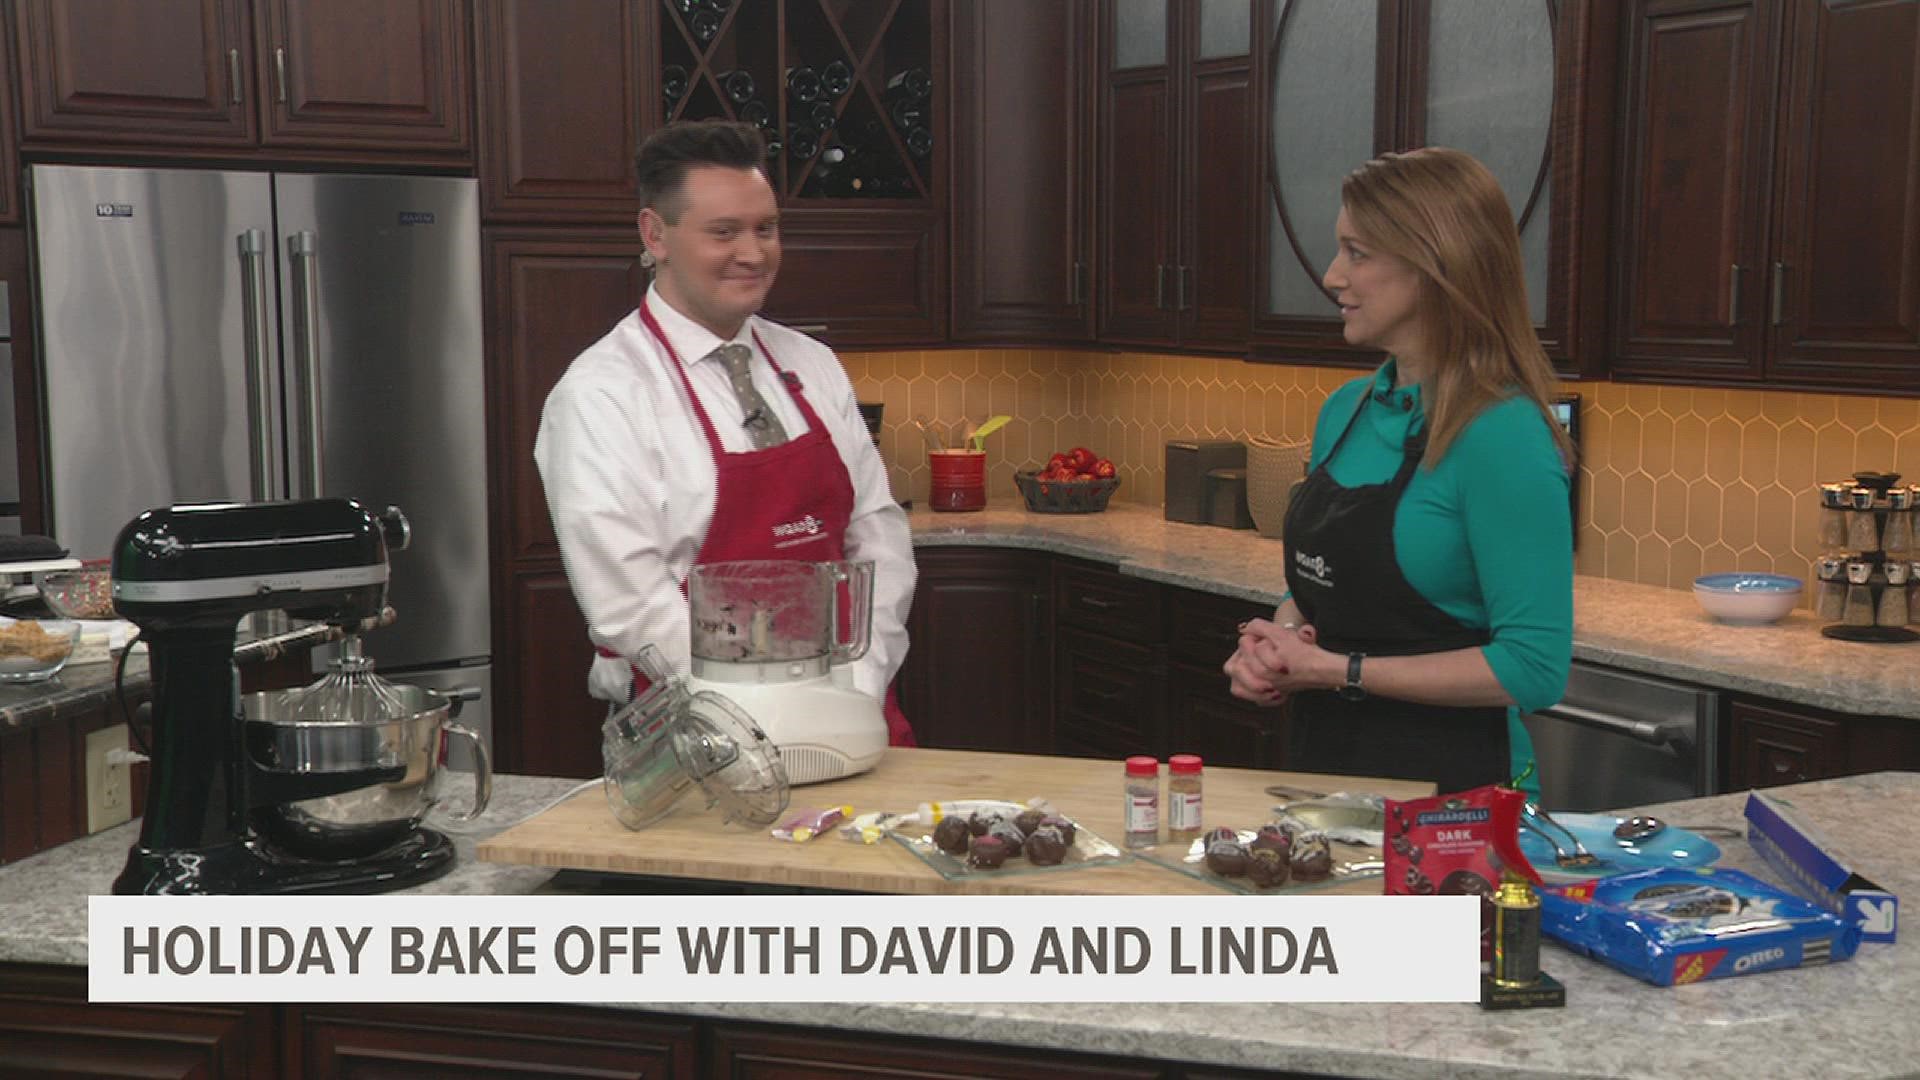 Santa's Trash Cookies vs. Oreo Truffles. David and Linda whip up two easy holiday sweet treats.